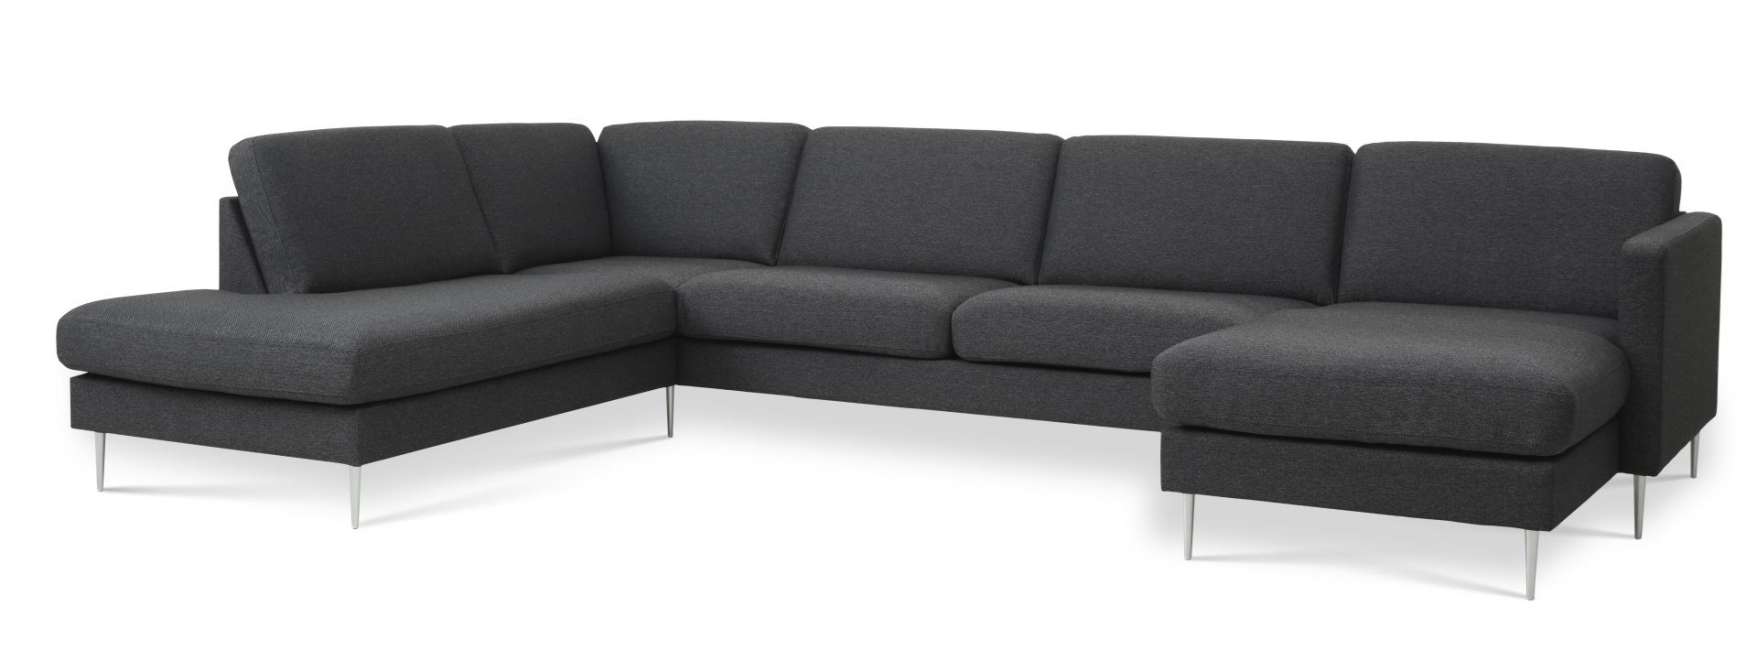 Priser på Ask sæt 54 U OE sofa, m. venstre chaiselong - antracitgrå polyester stof og børstet aluminium